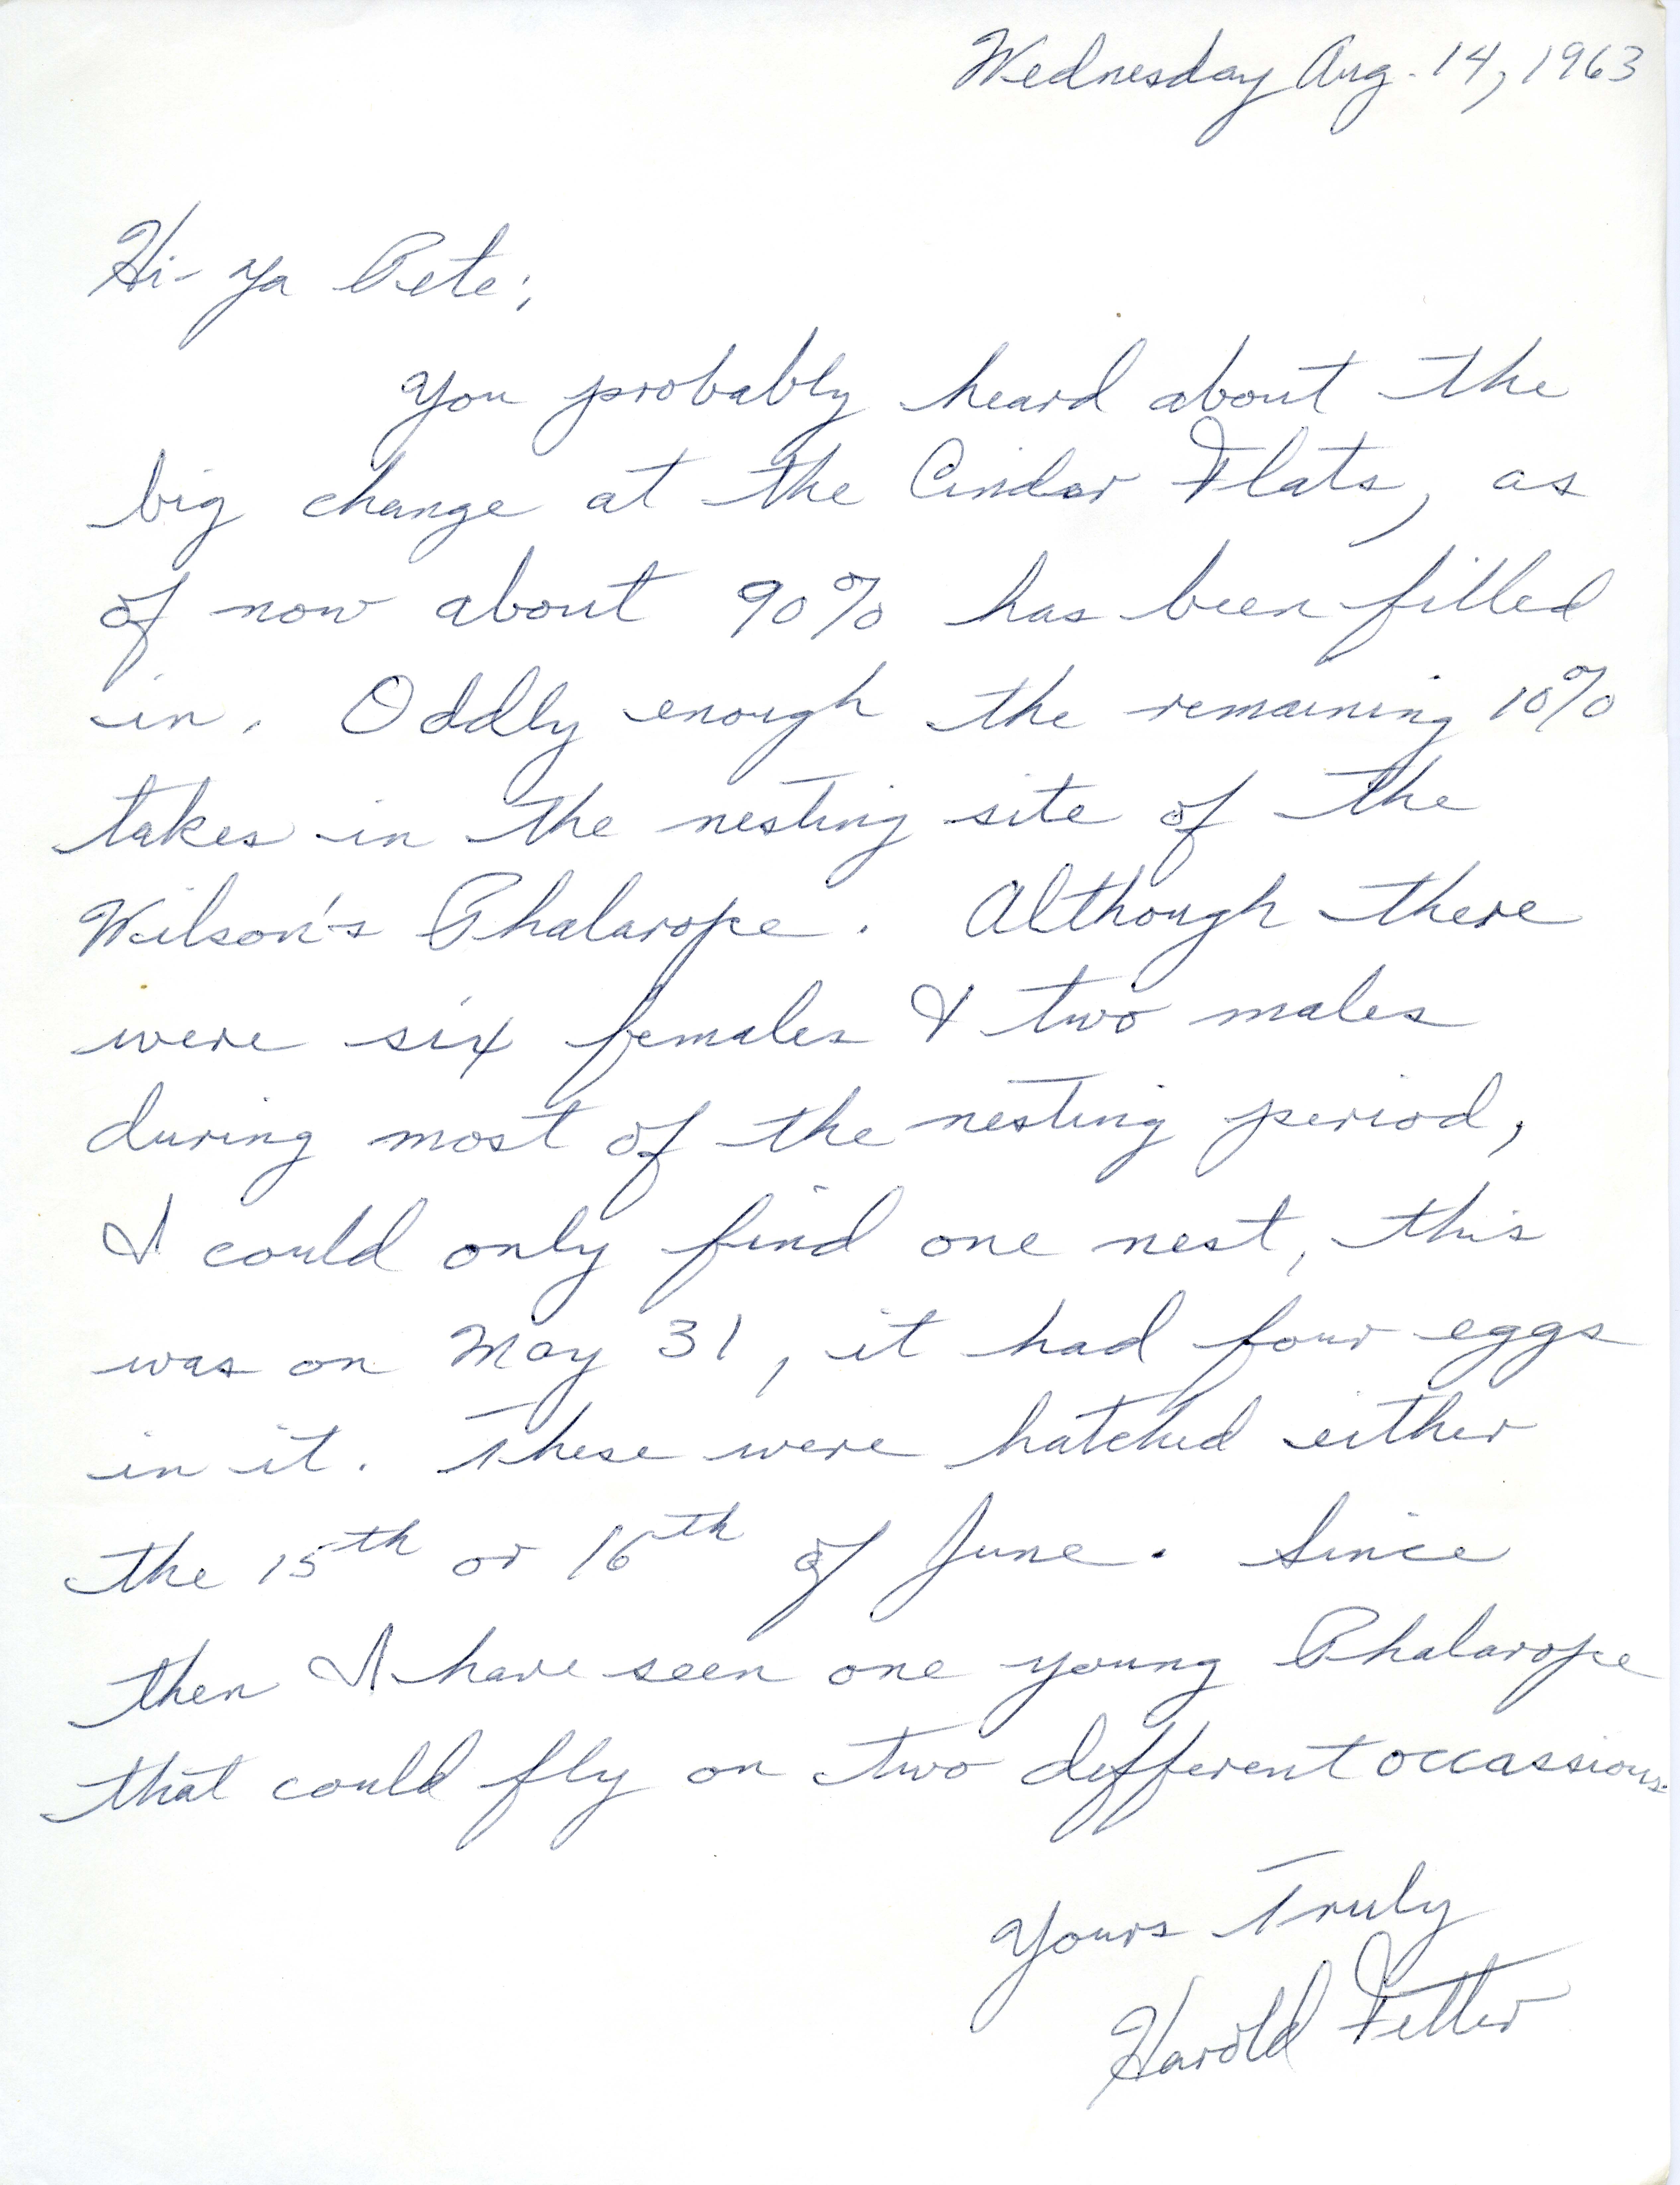 Harold Fetter letter to Peter C. Petersen regarding bird sightings, August 14, 1963